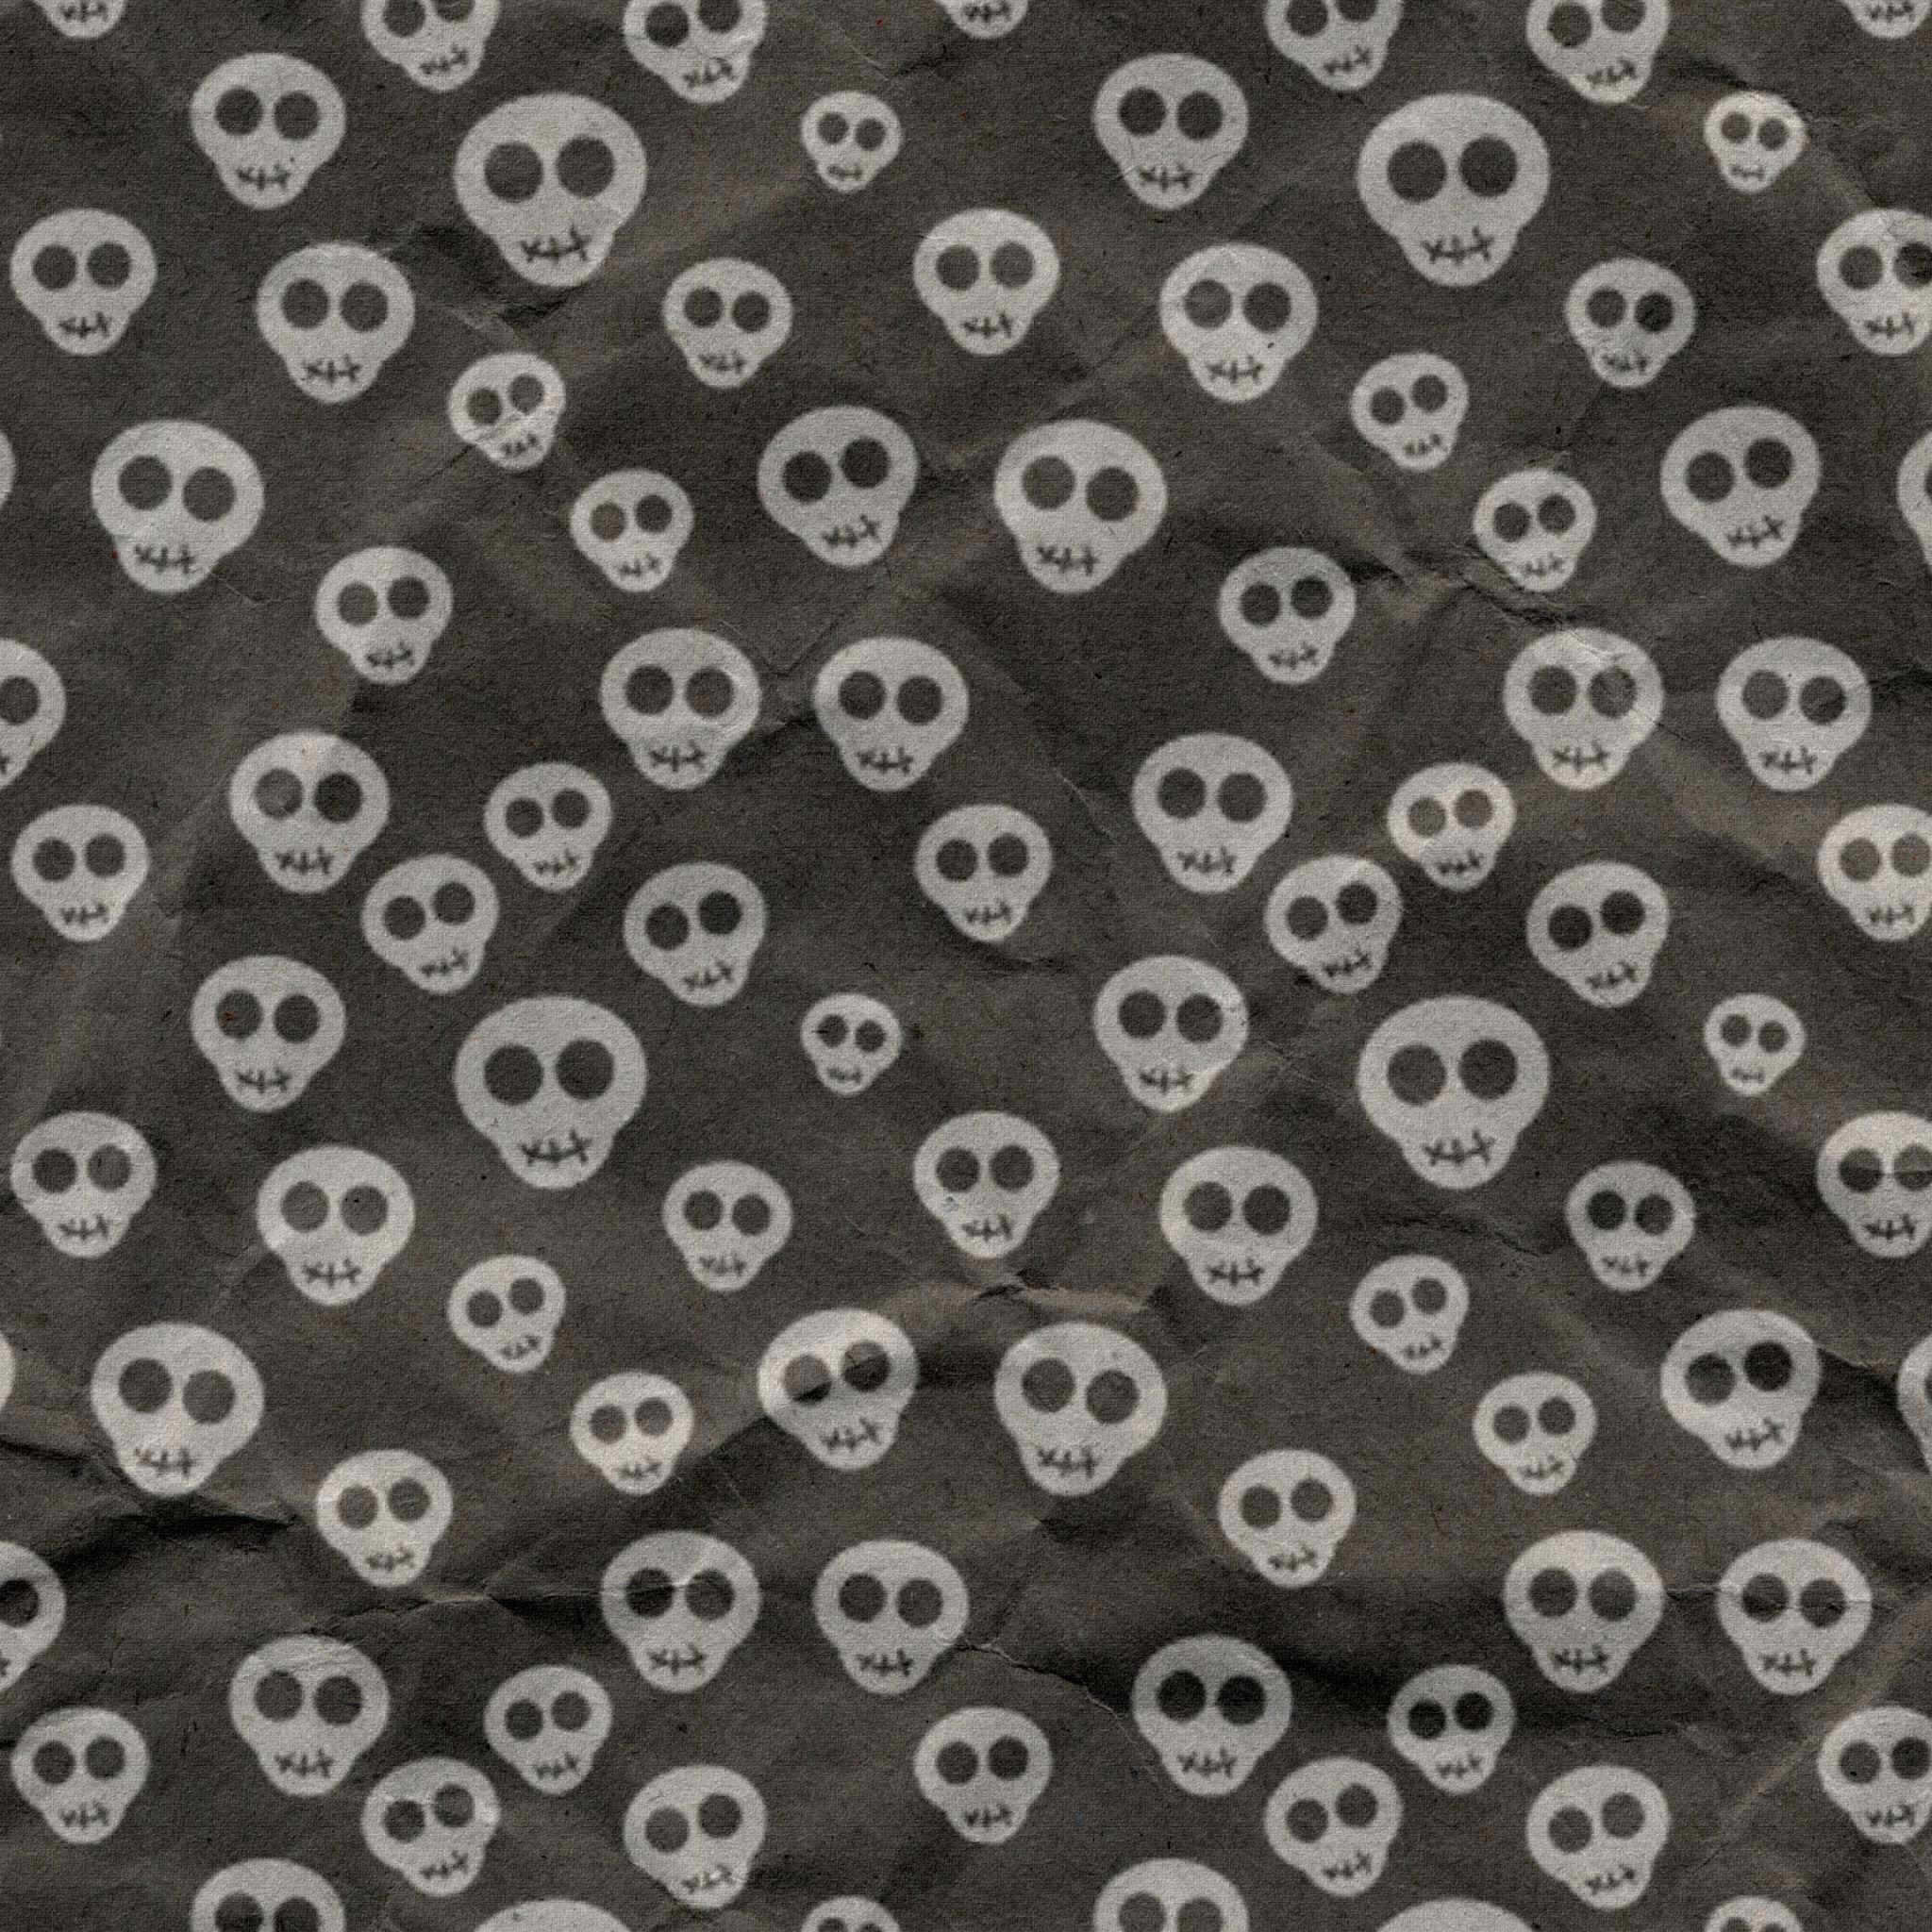 Cute Skulls Wrapping Paper iPad Air wallpaper 